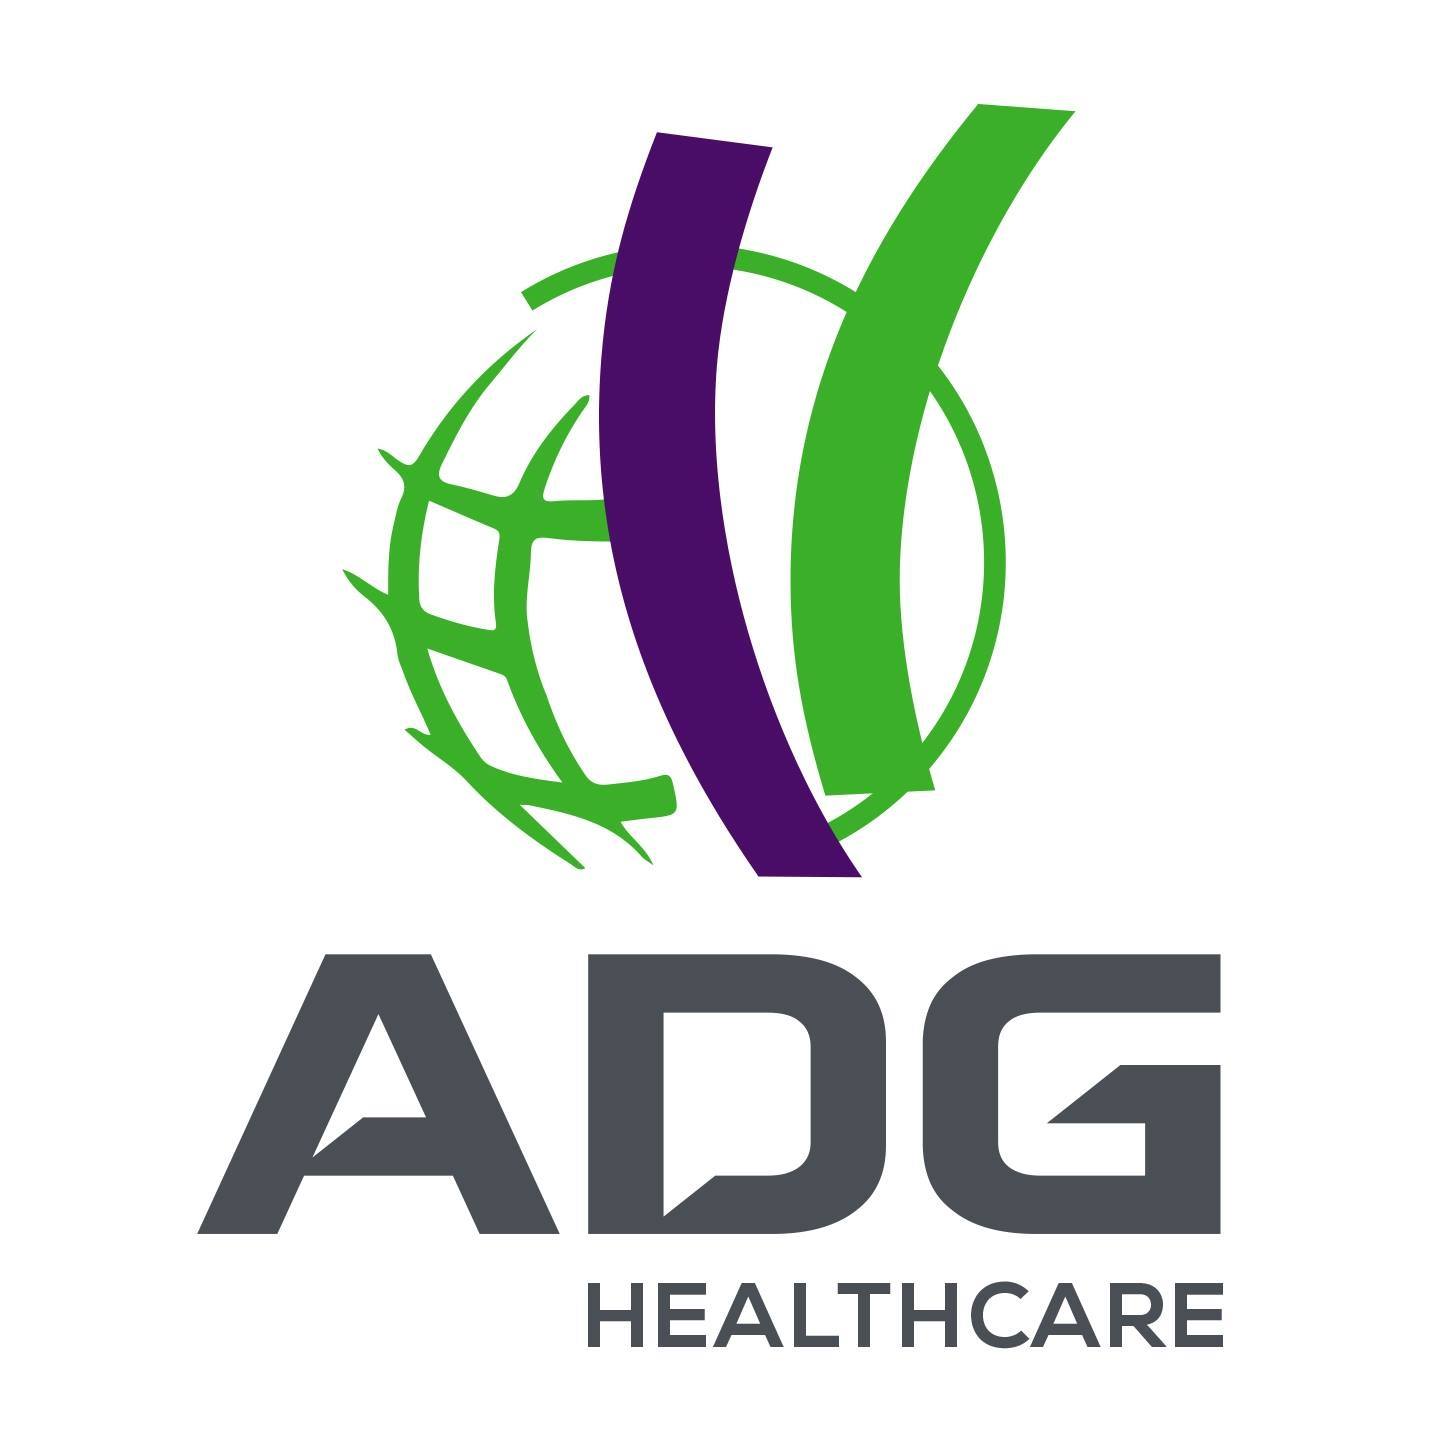 ADG Healthcare